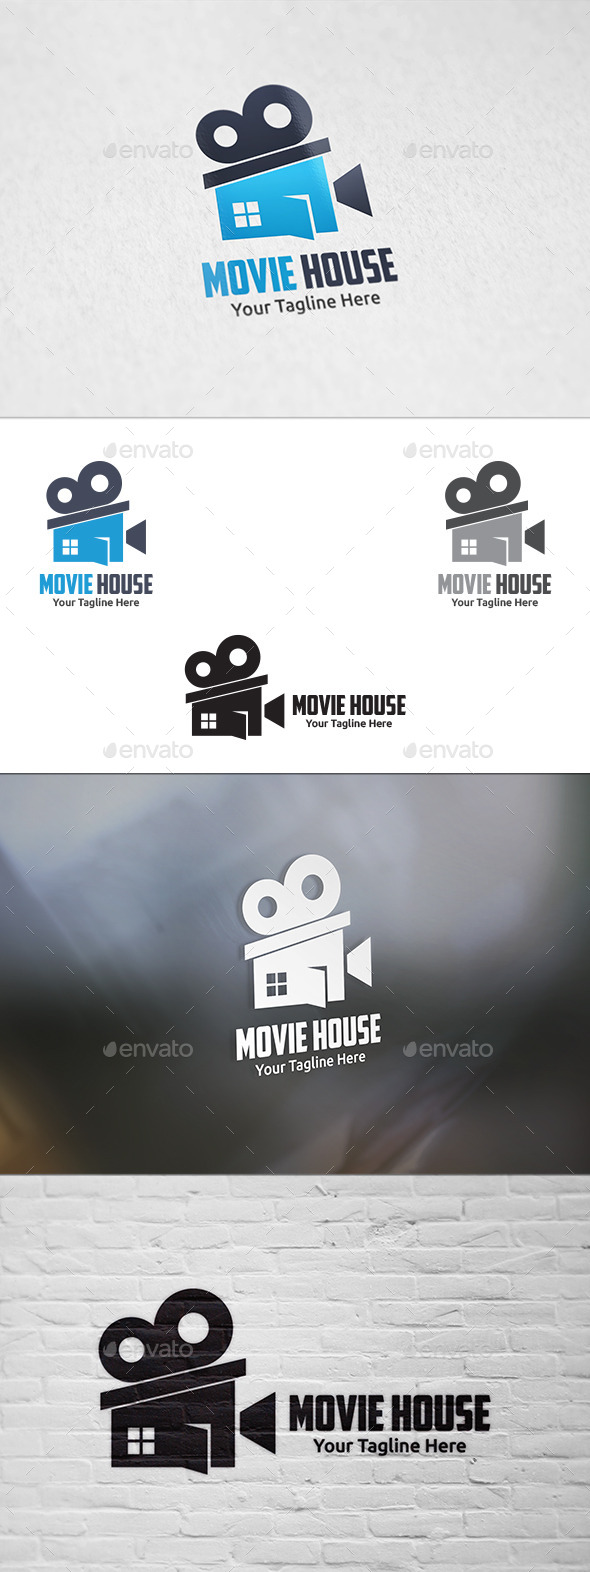 Movie House - Logo Template